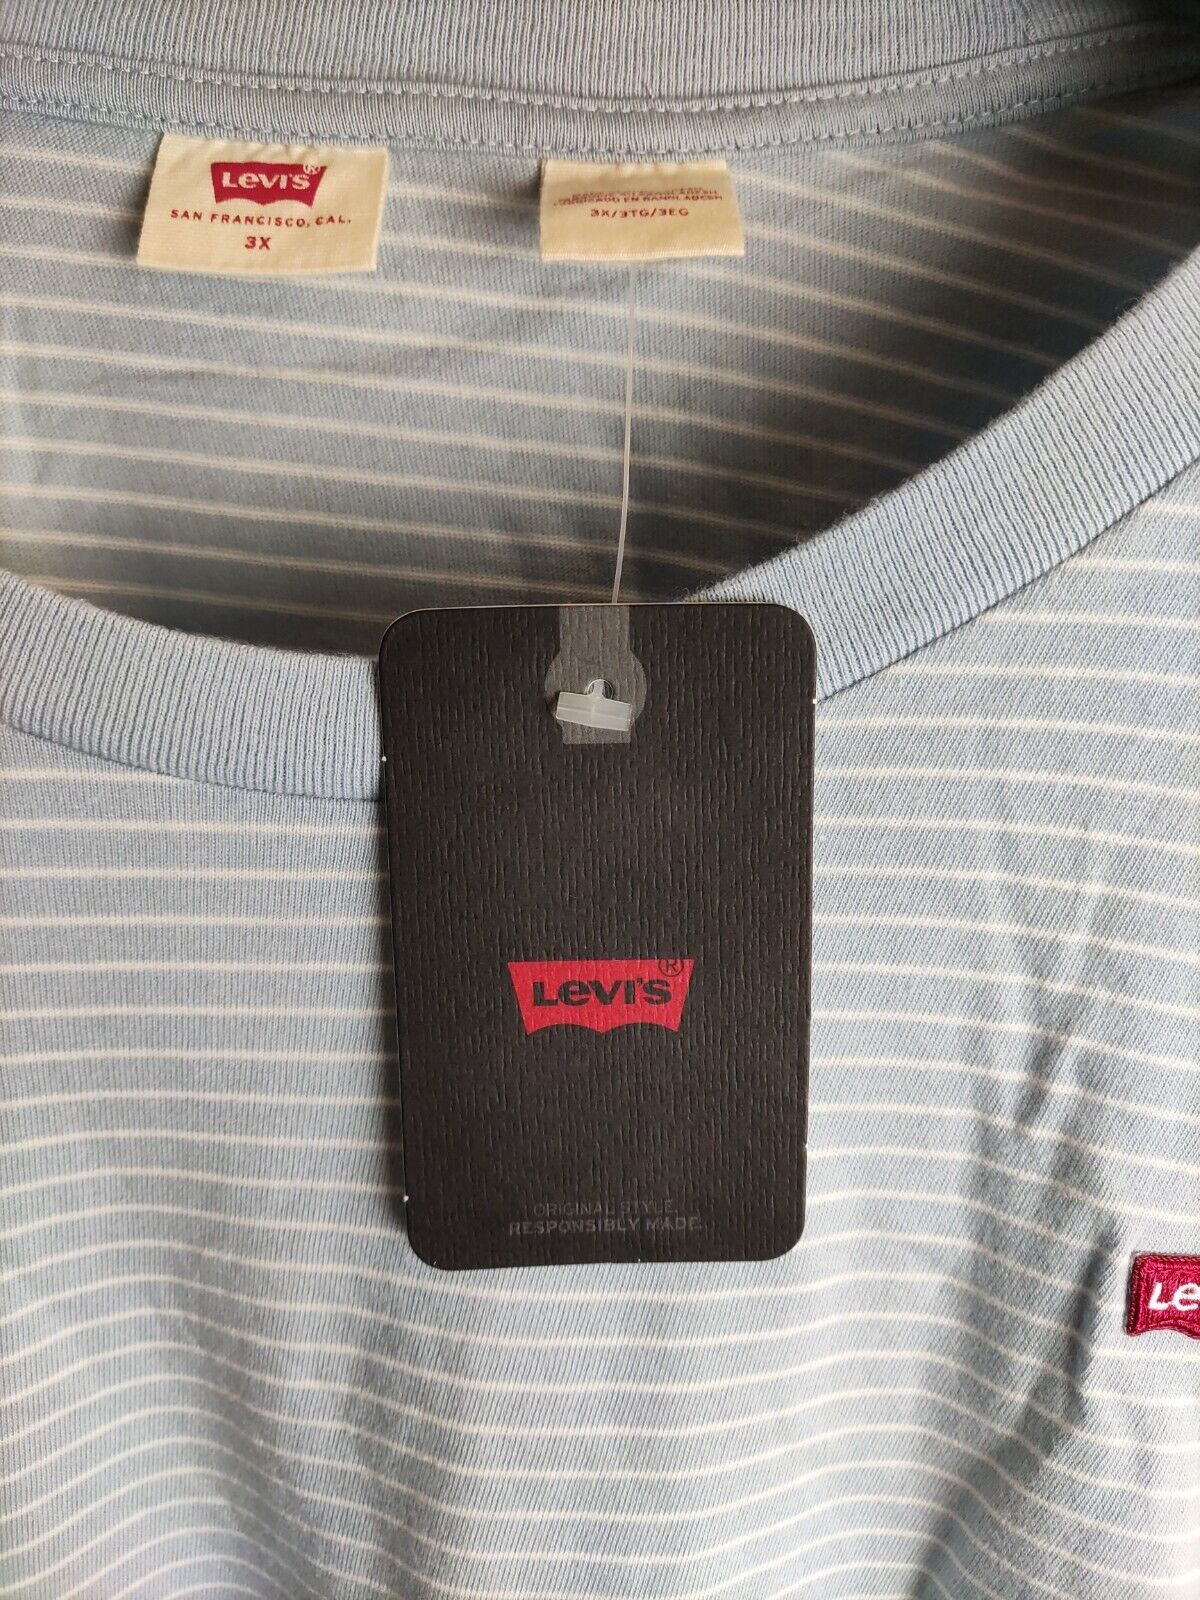 LEVIS Chesthit Embroidered Logo T-Shirt Blue Striped. Uk 3XL ****v63